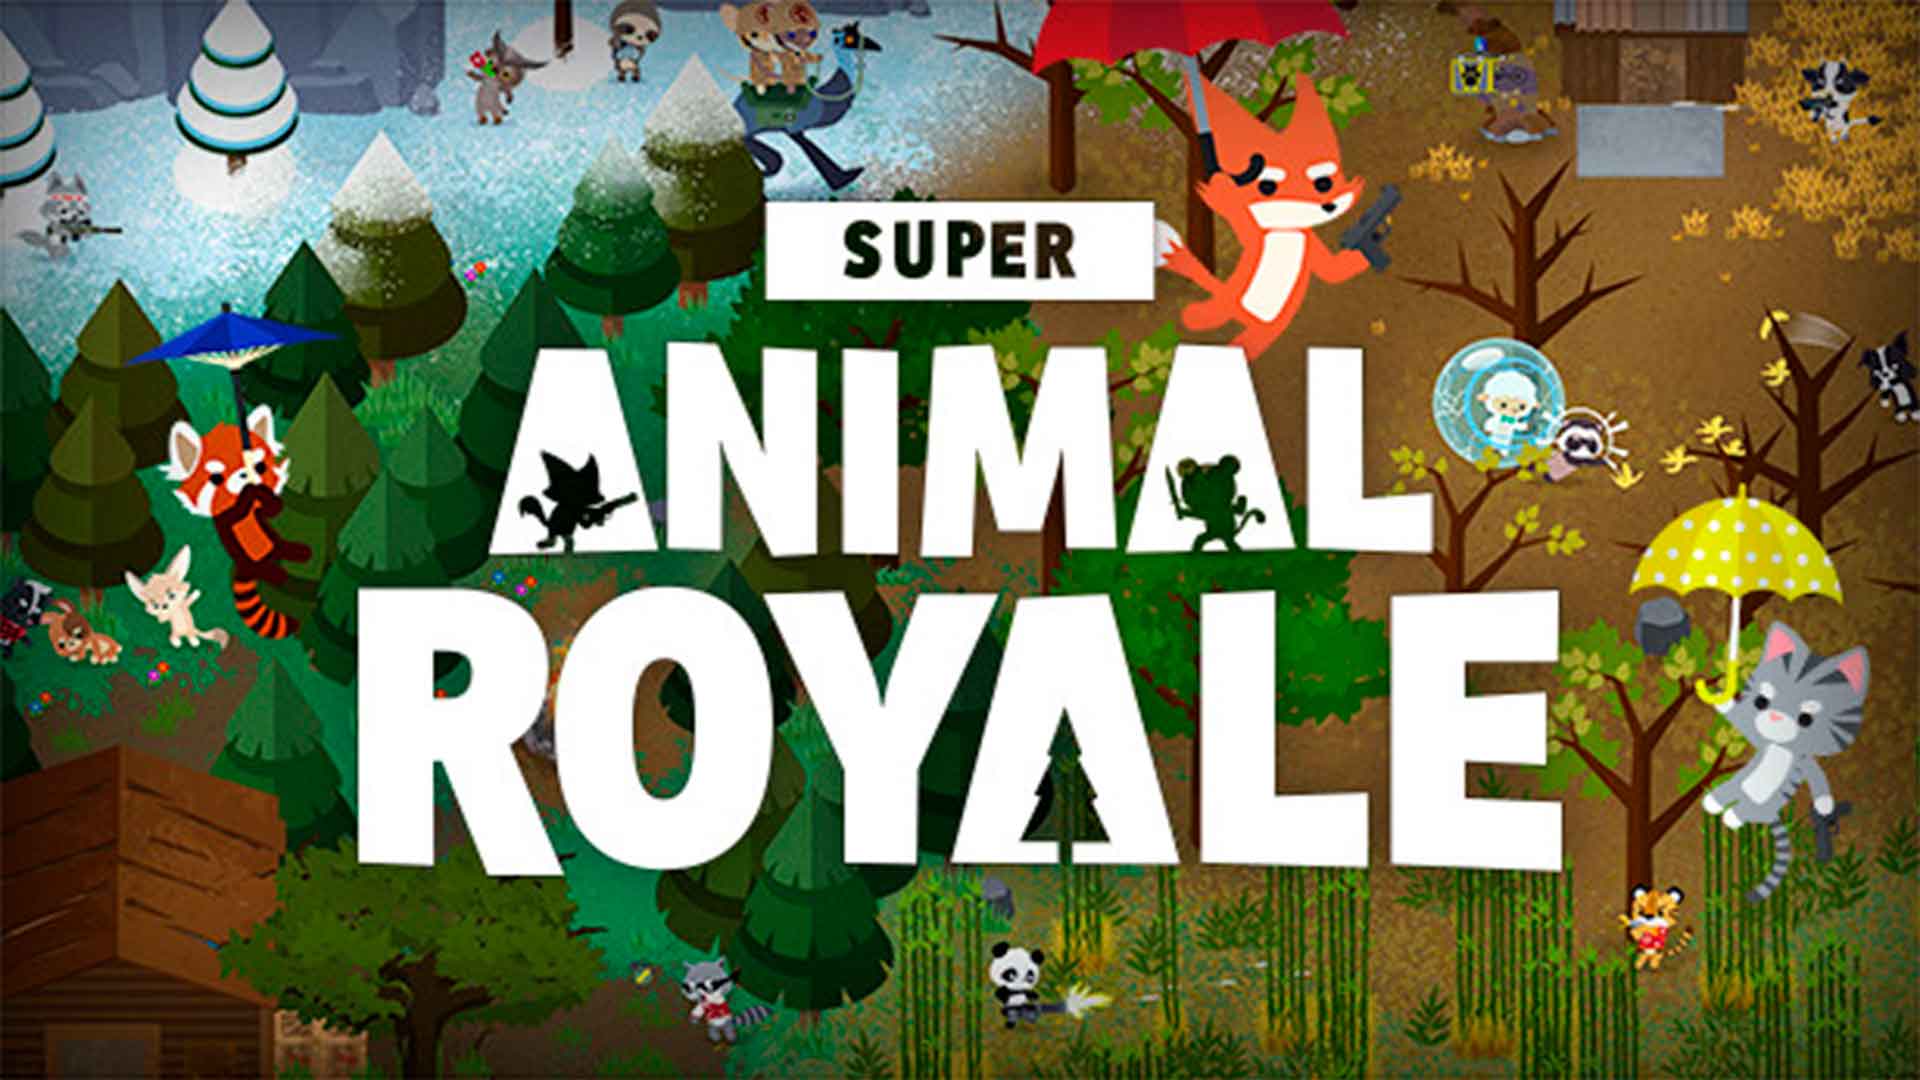 Super animal royale, GamersRD